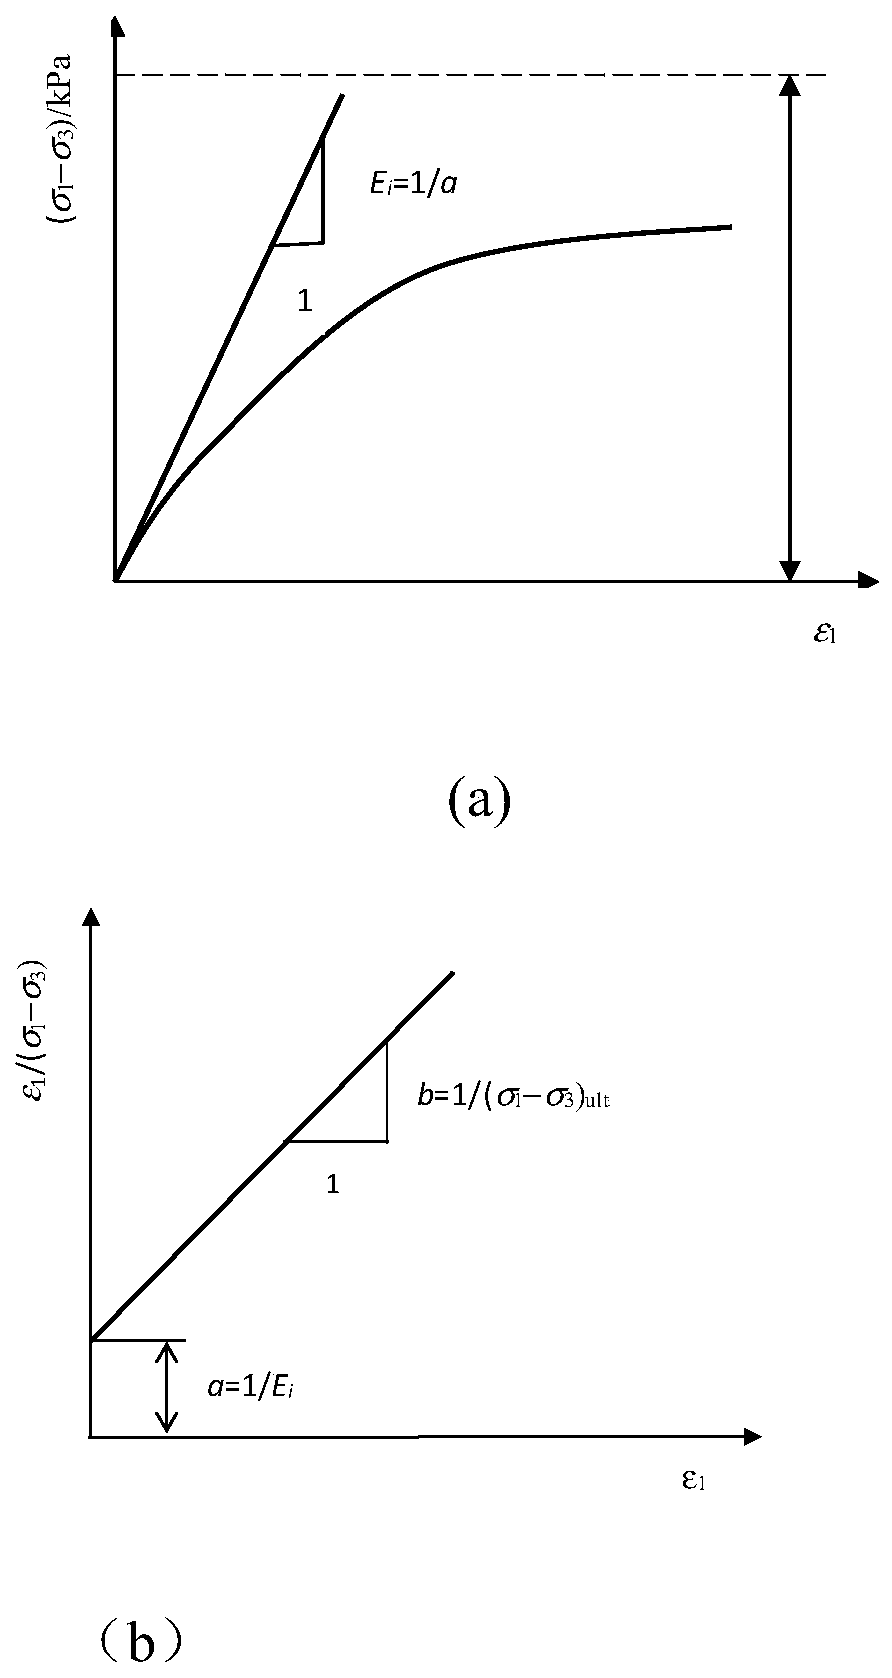 Method for solving parameters in Duncan-Chang hyperbolic model based on Excel